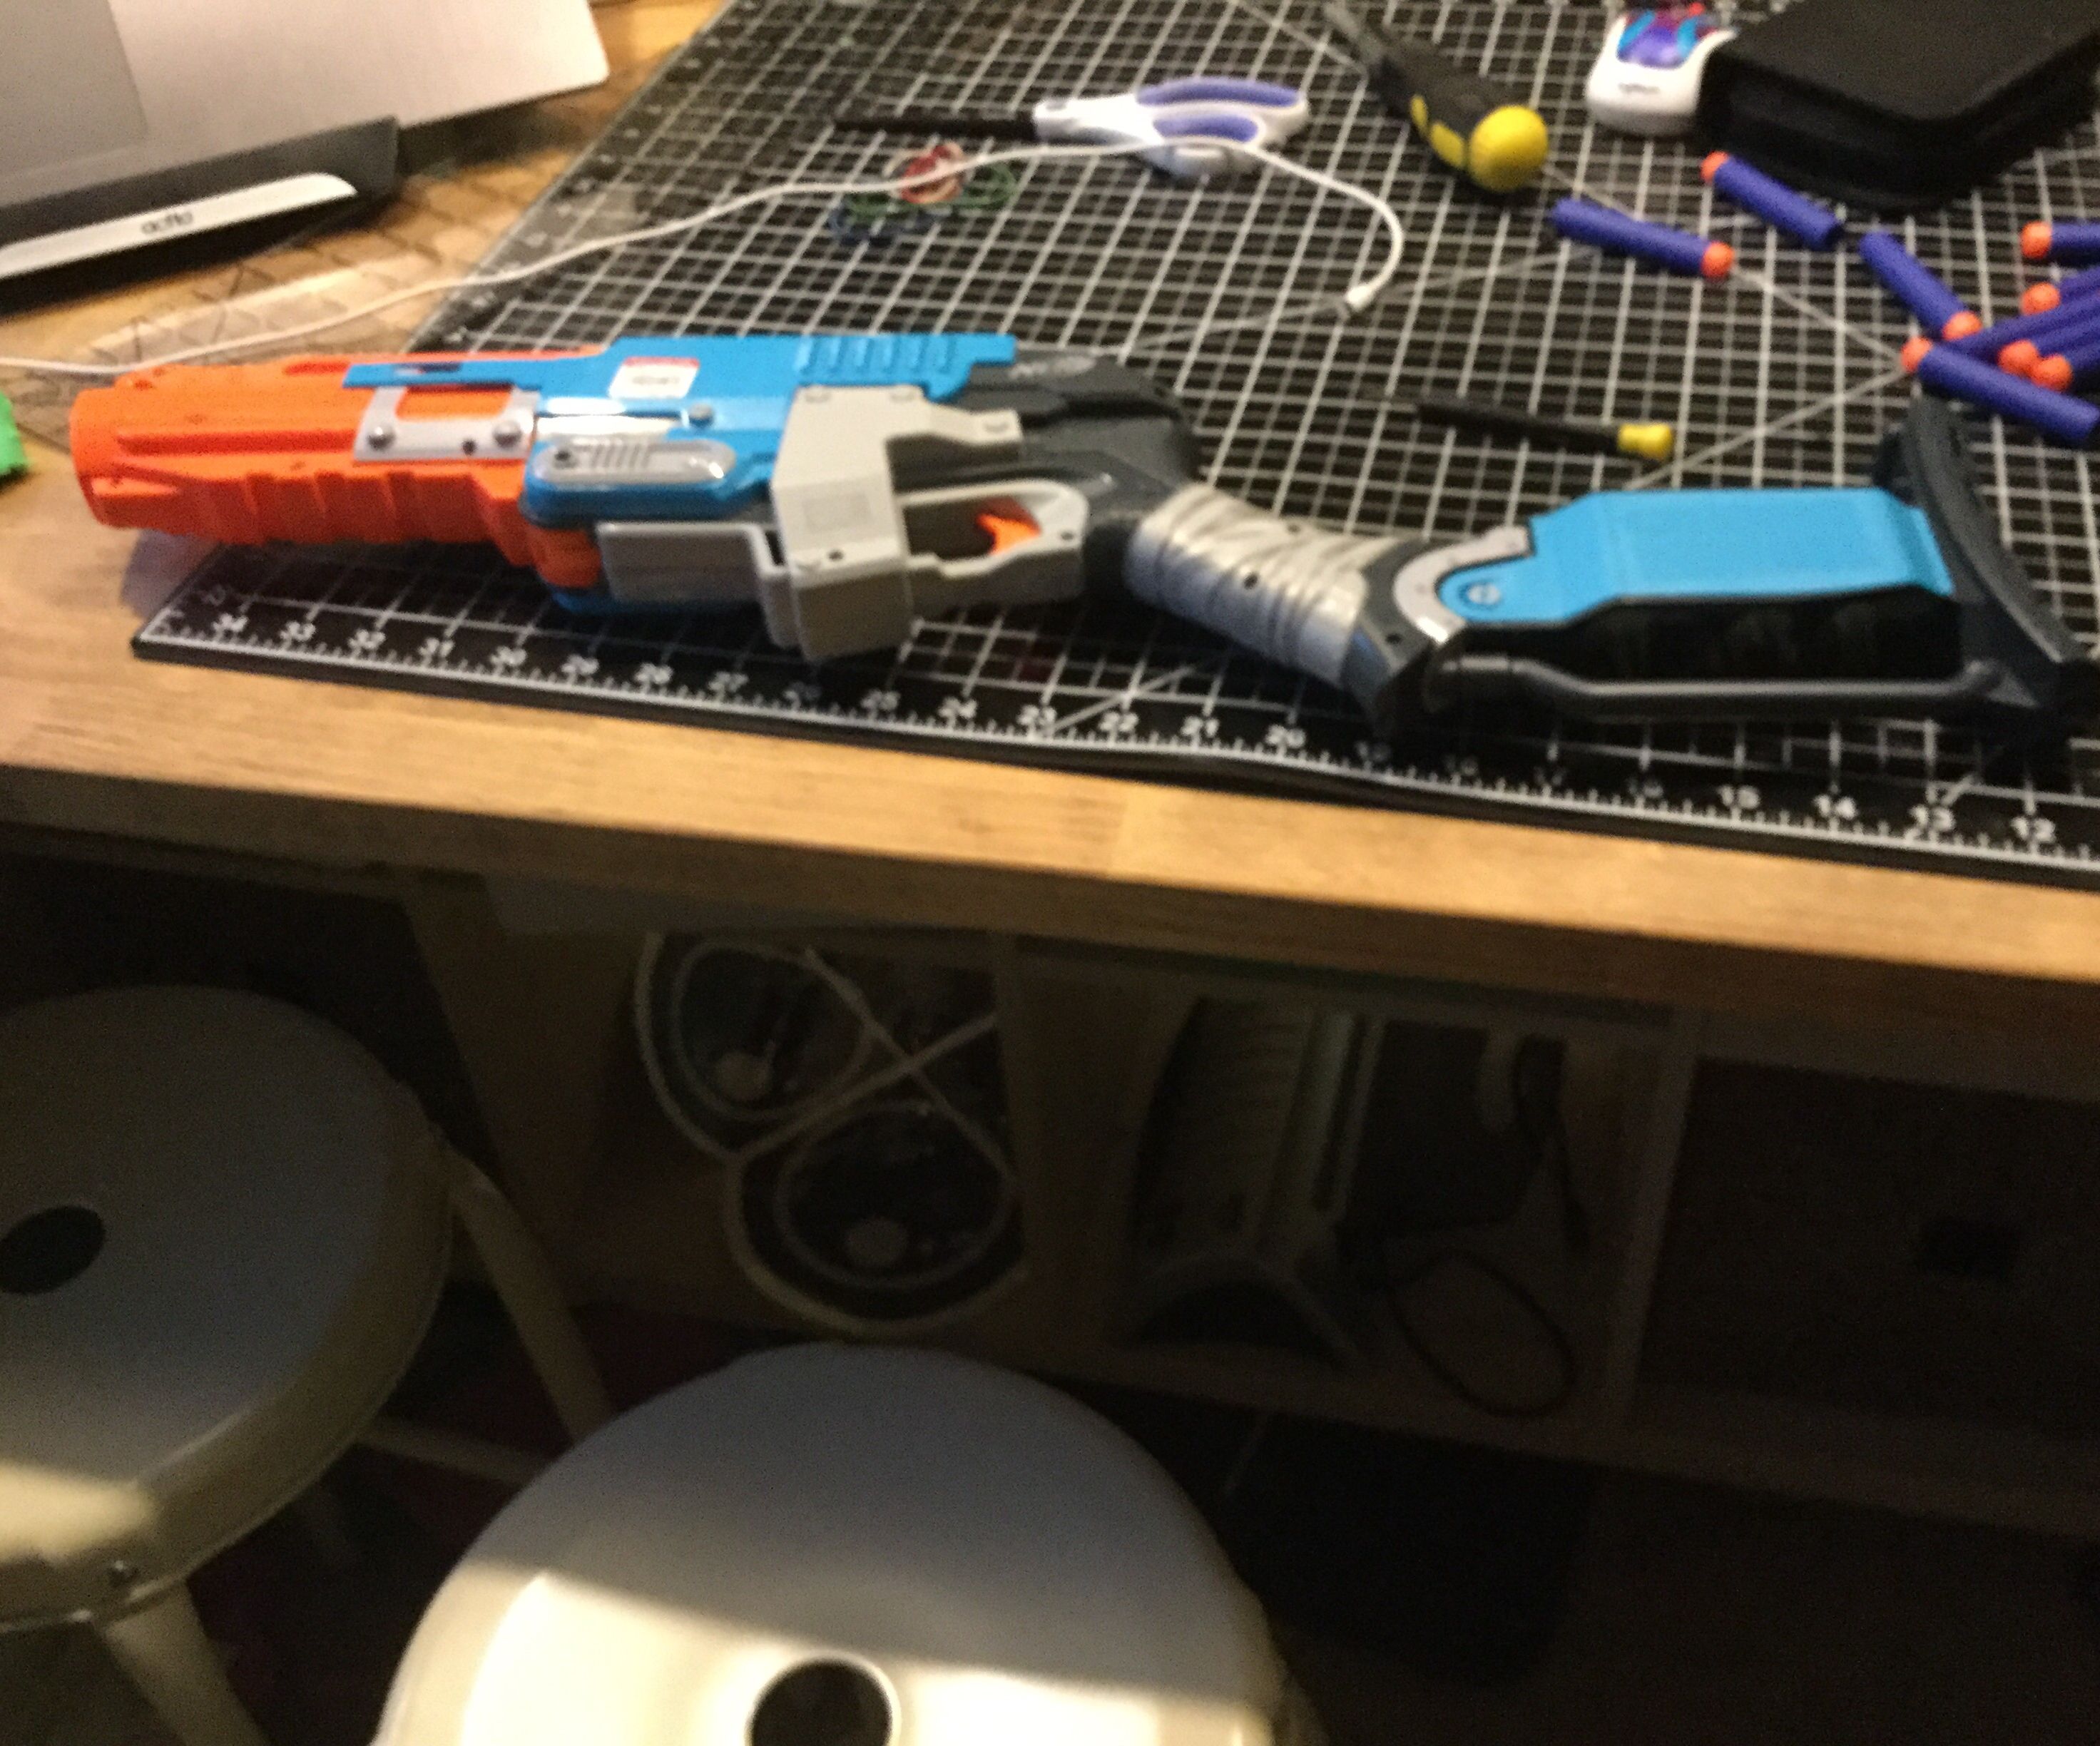 How to make a Nerf sawed off shotgun